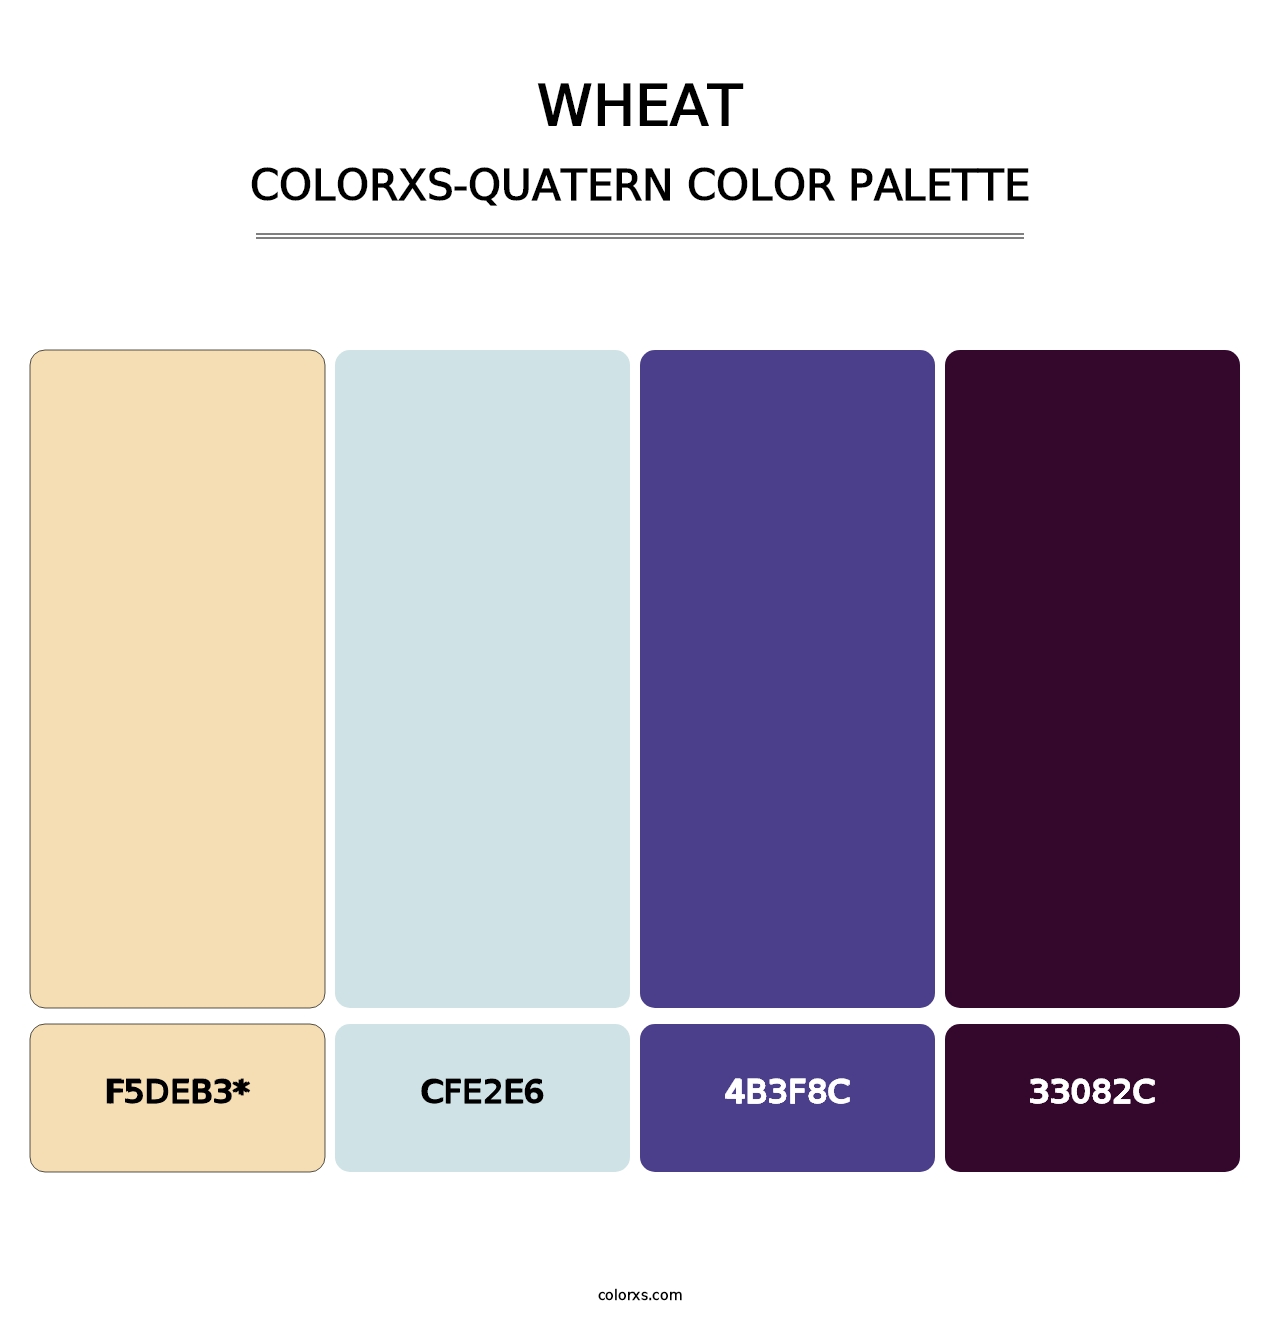 Wheat - Colorxs Quatern Palette